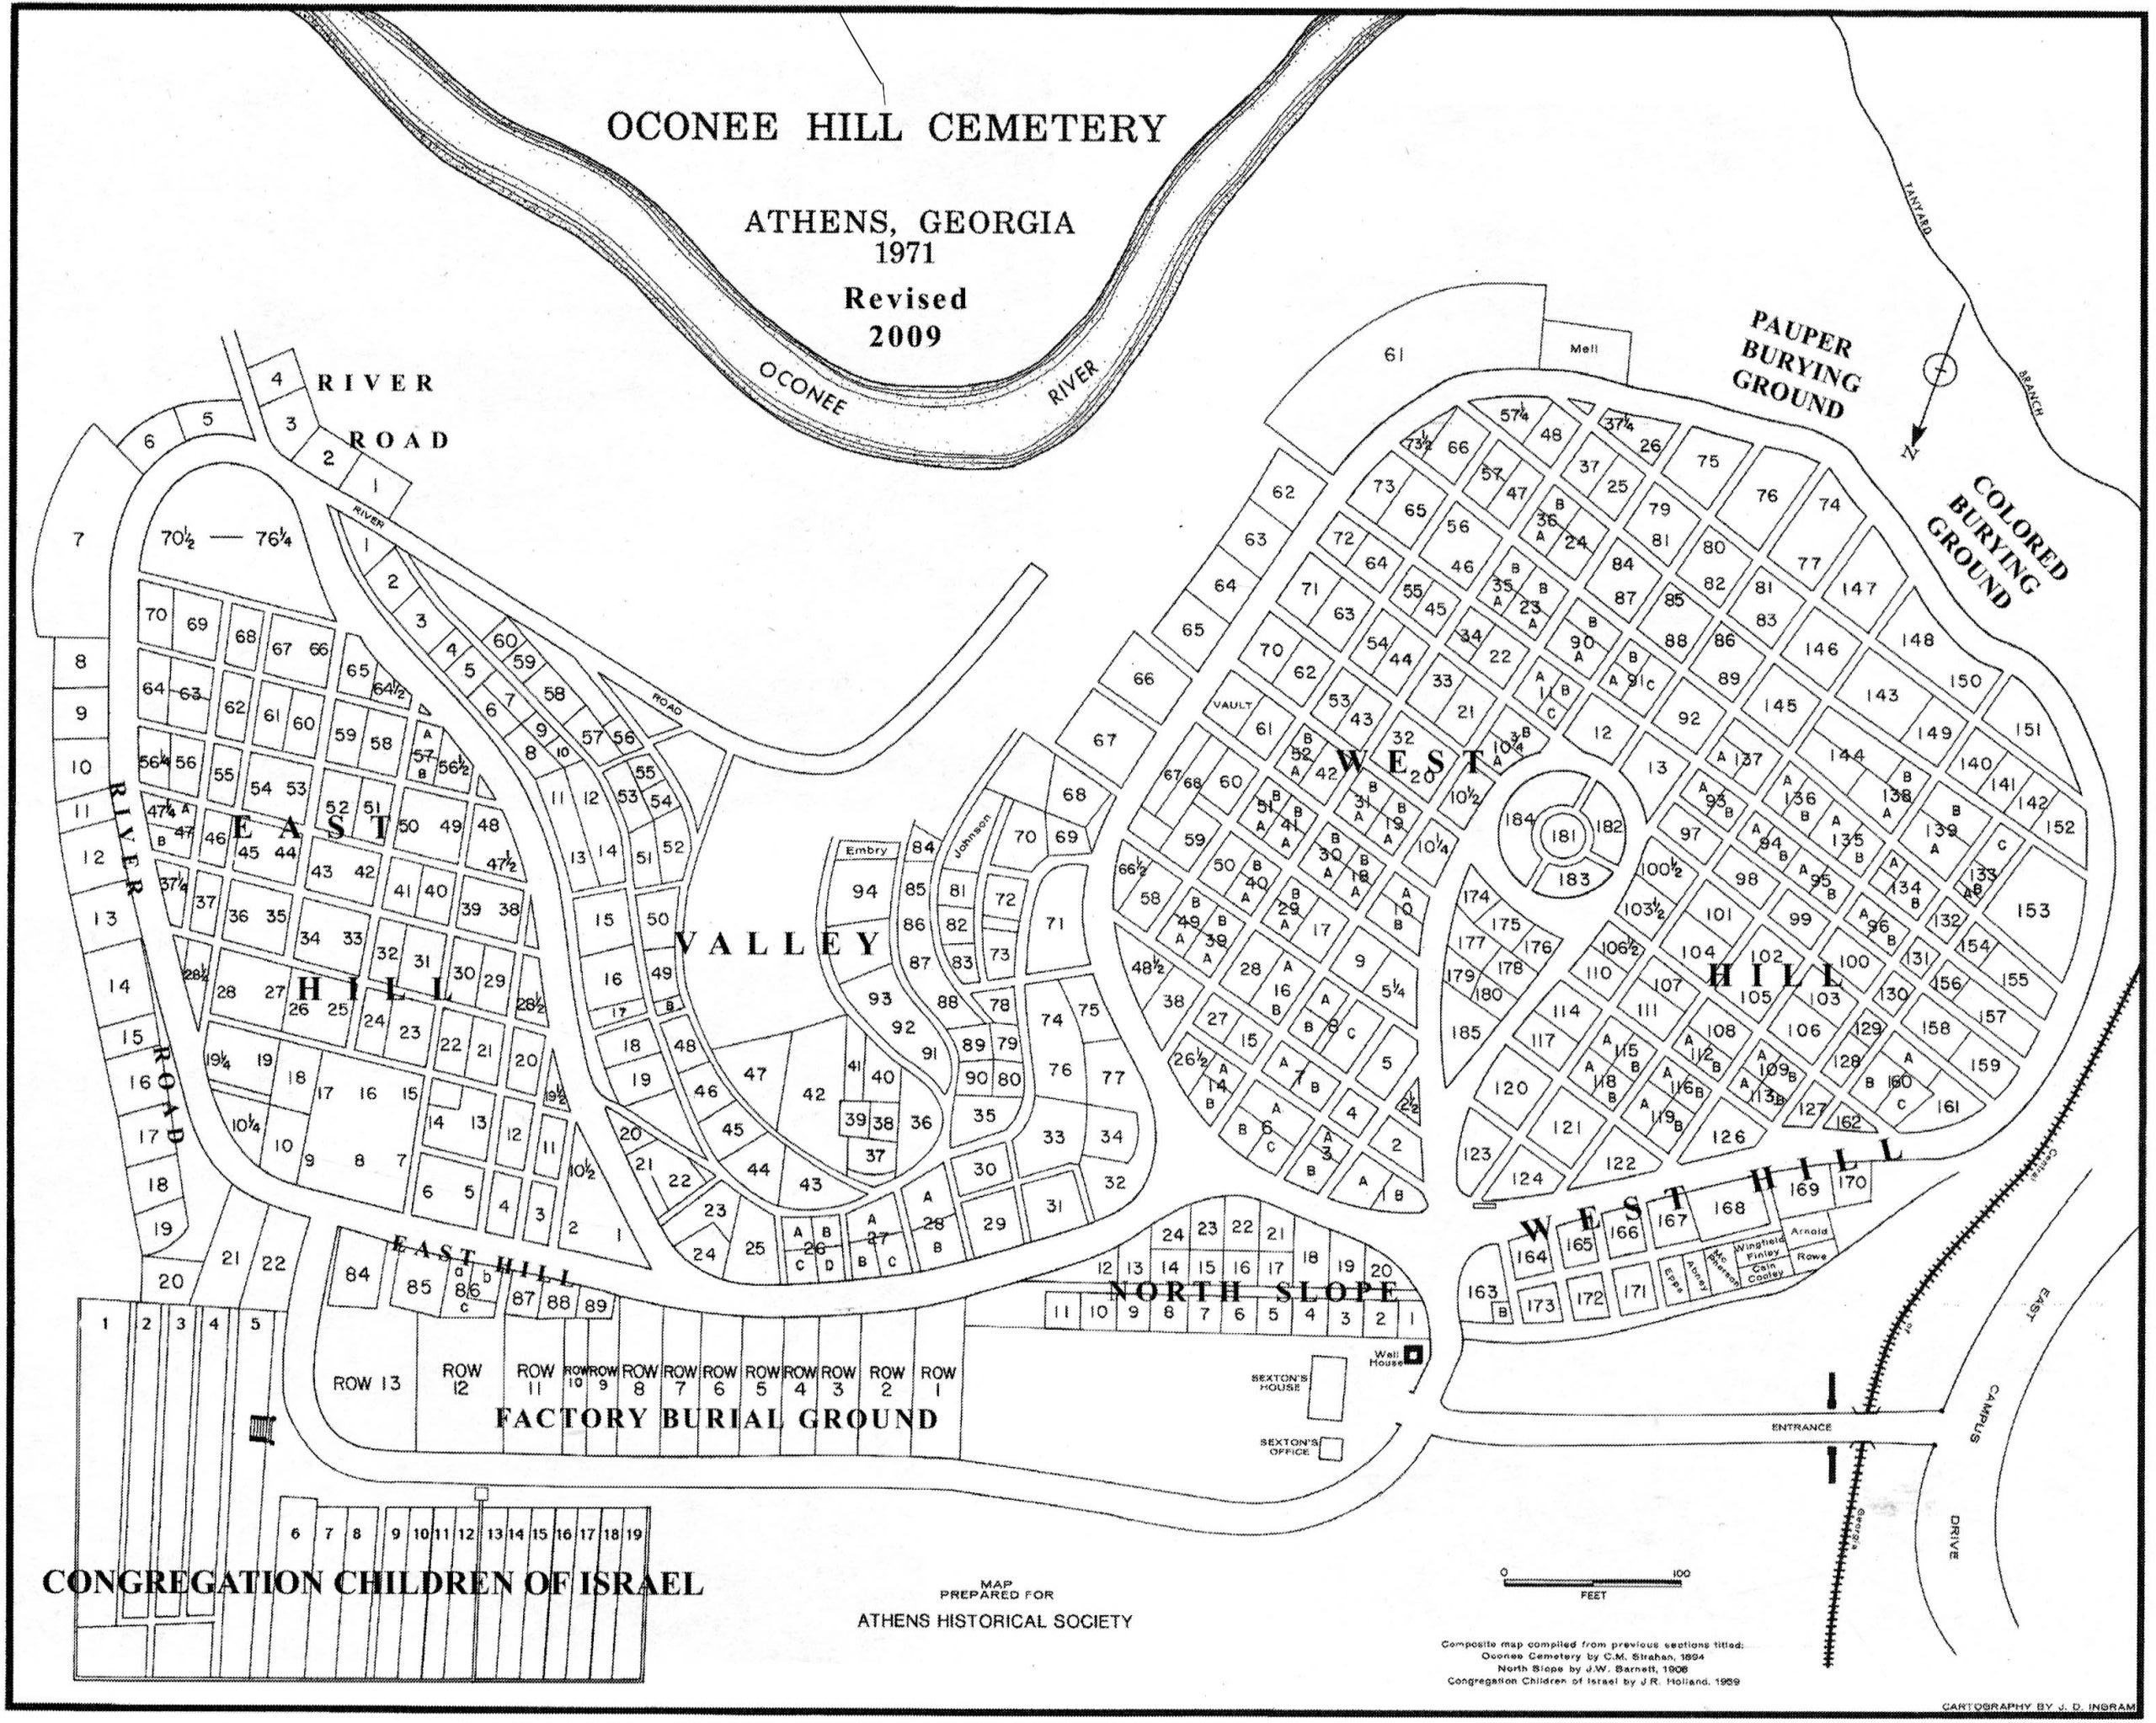 Cemetery map of Oconee Hills Cemetery in Athens Georgia